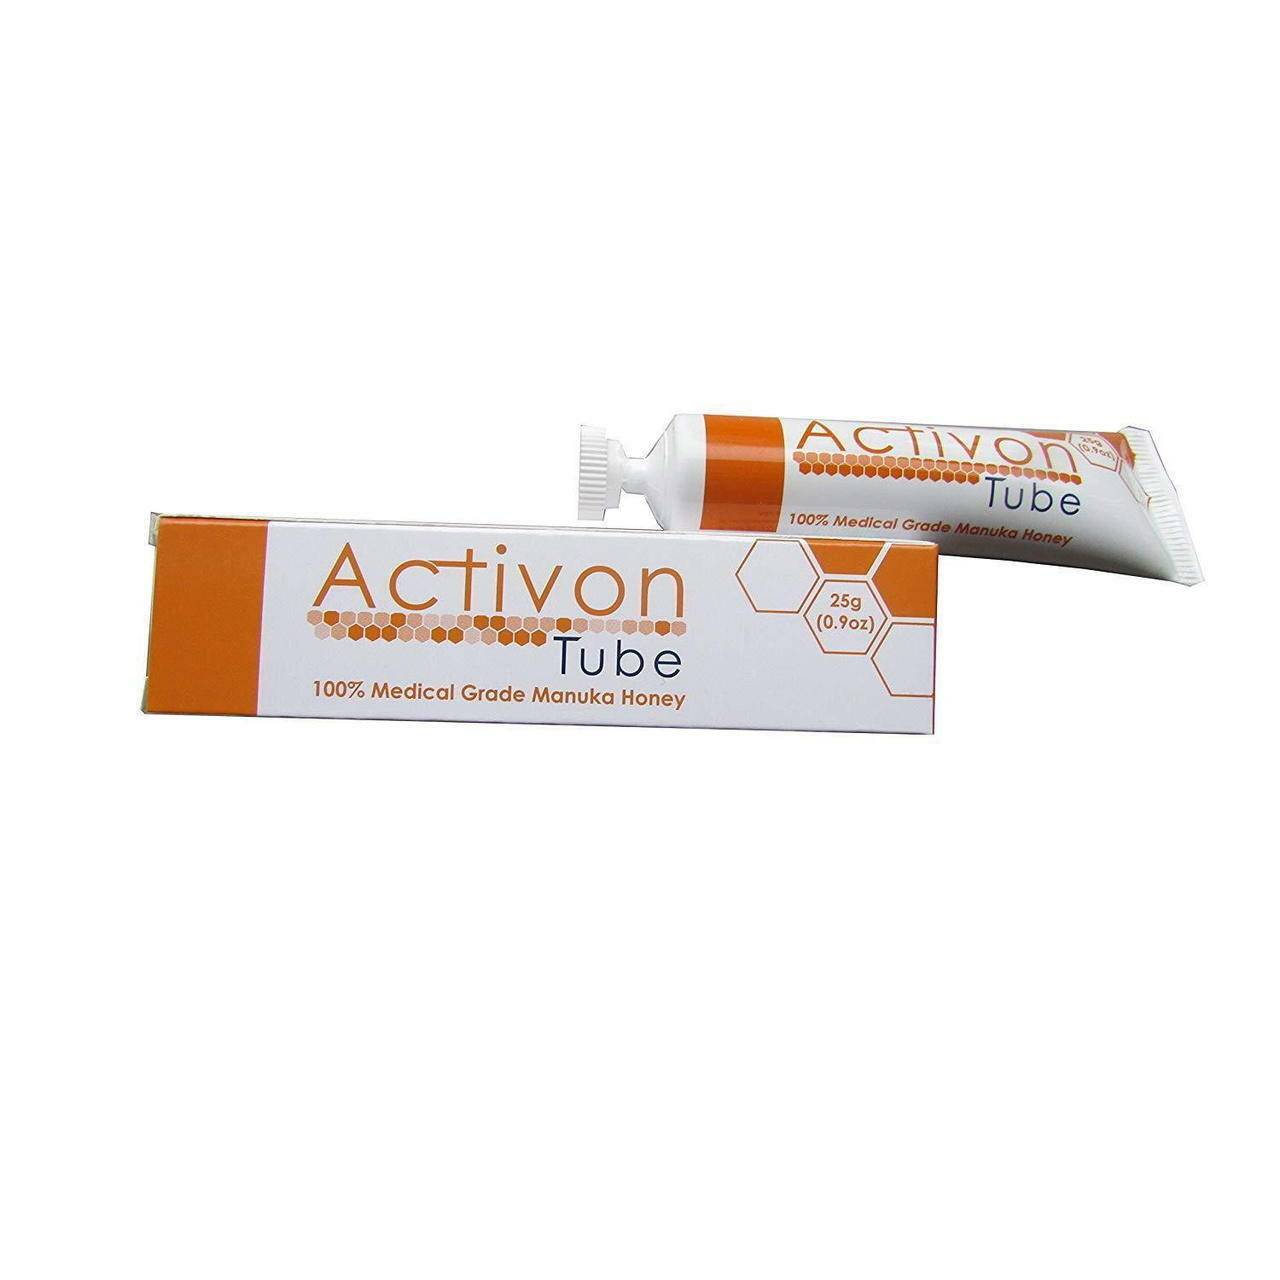 Activon Tube 100% Manuka Honey 25g Medical Grade - UKMEDI